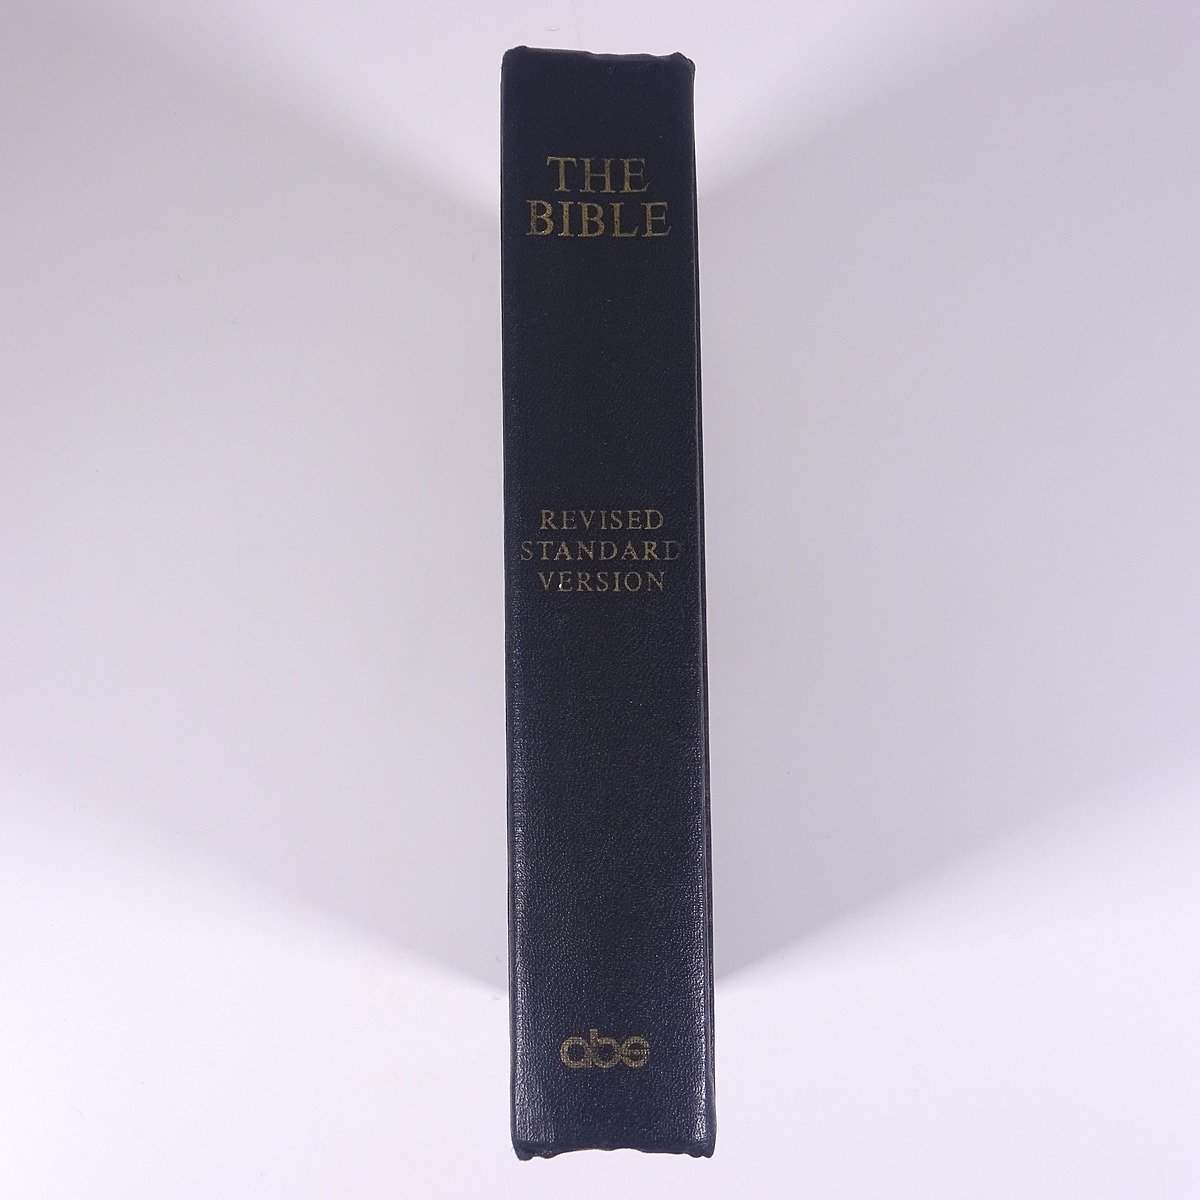 【英語洋書】 THE BIBLE 旧約聖書 新約聖書 REVISED STANDARD VERSION 改訂標準版 1971 単行本 キリスト教 聖書_画像3